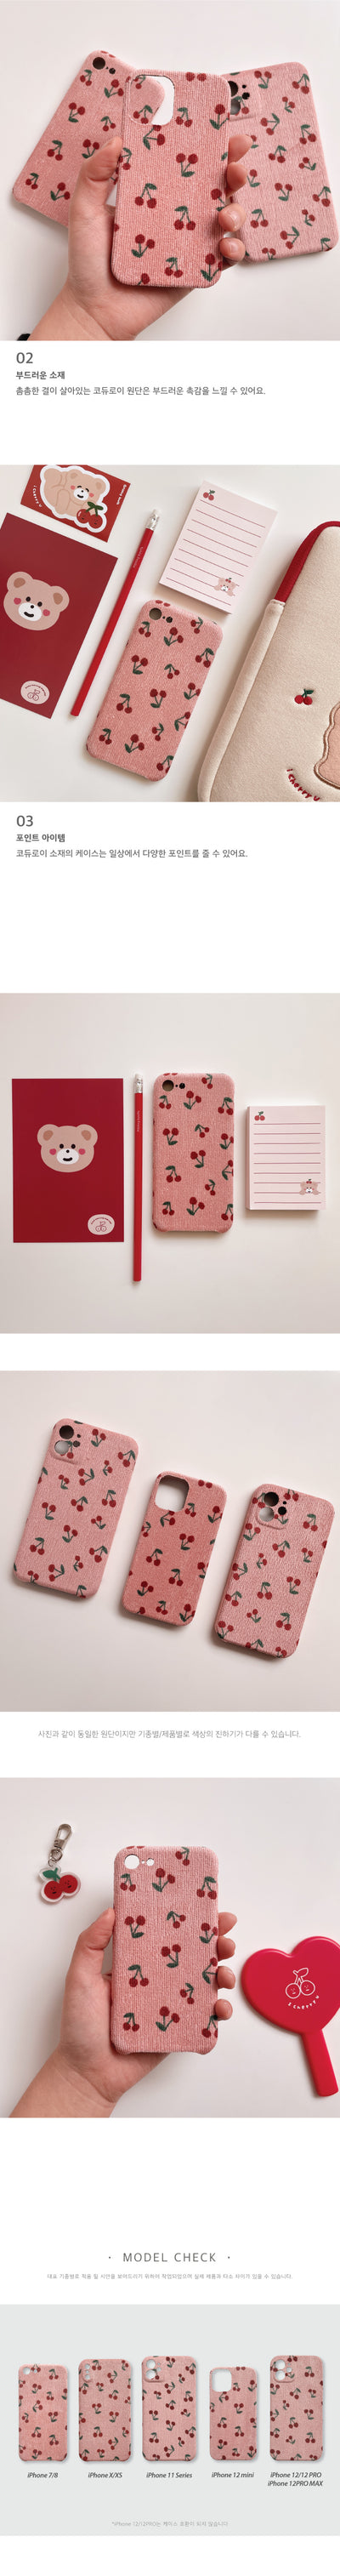 cherry smartphone case